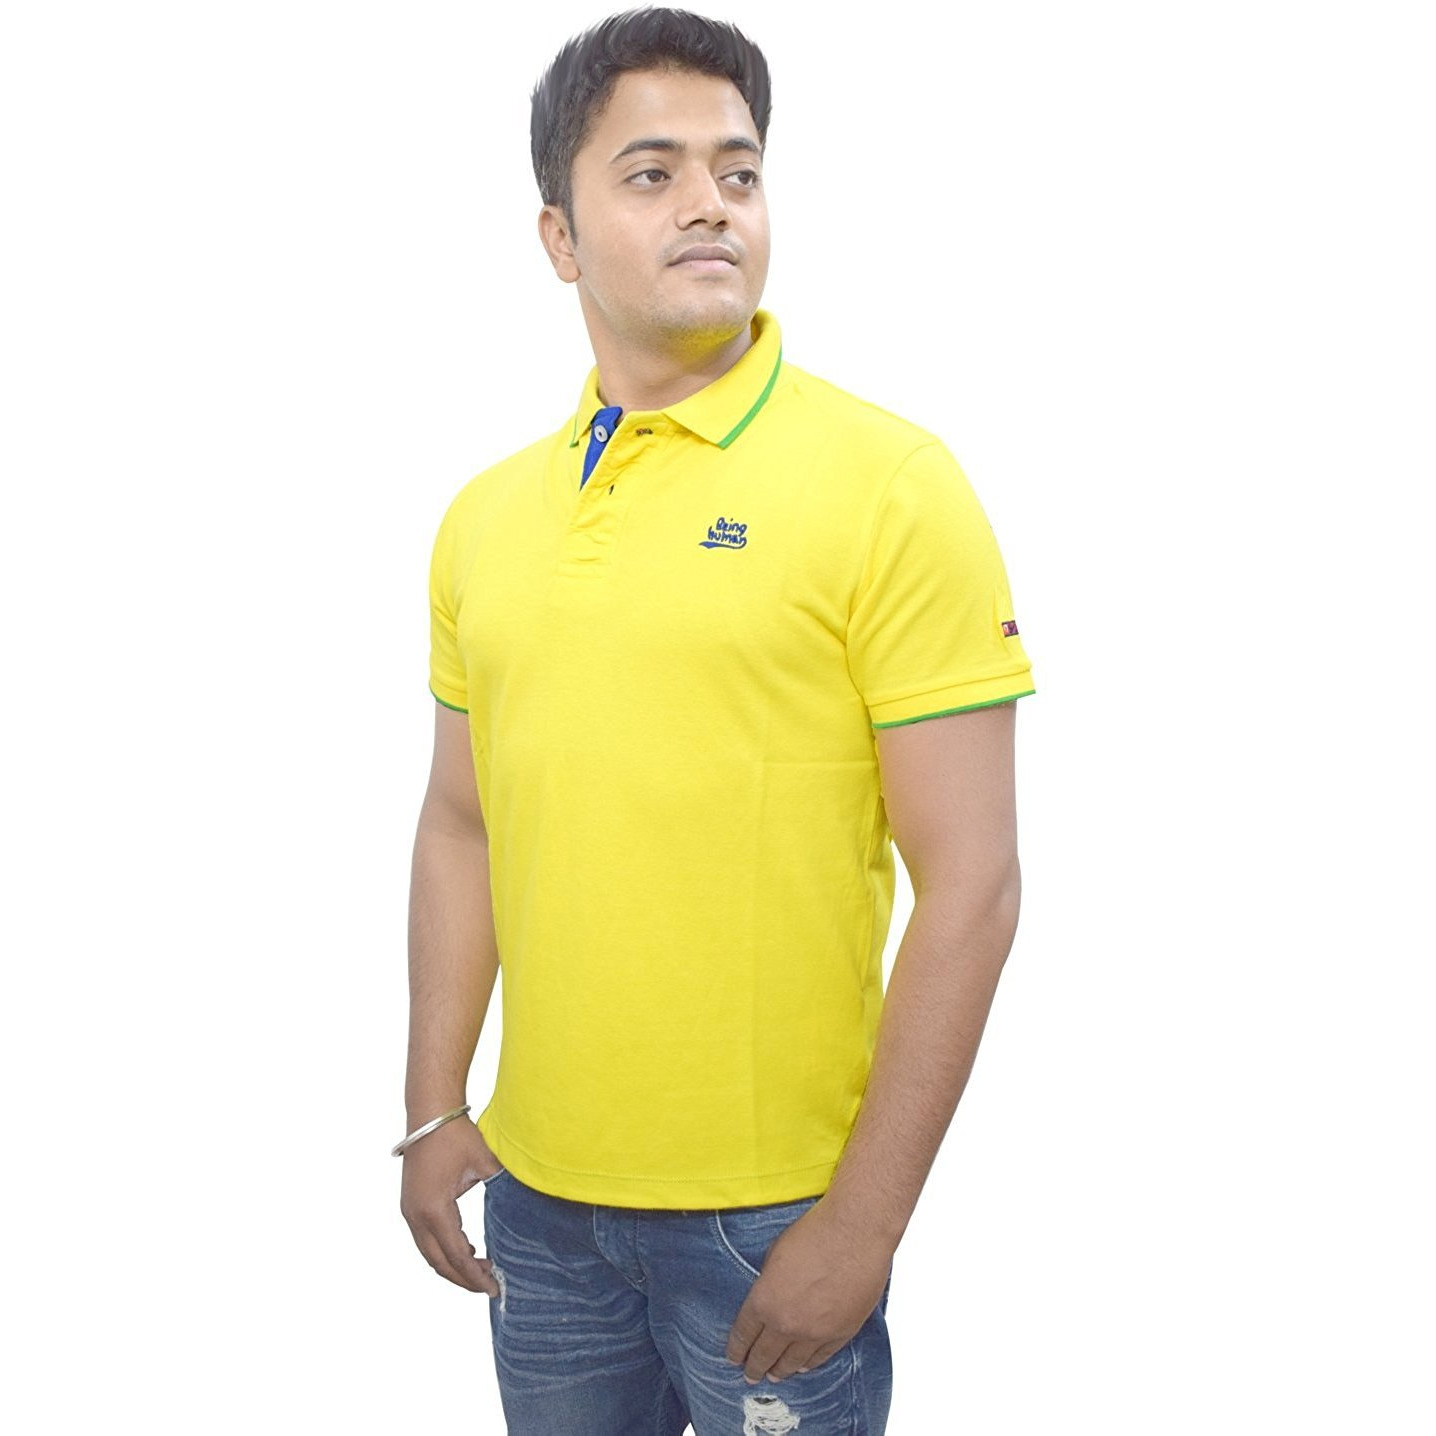 Winmaarc New Designer Cotton Yellow Color Collar Polo T Shirt